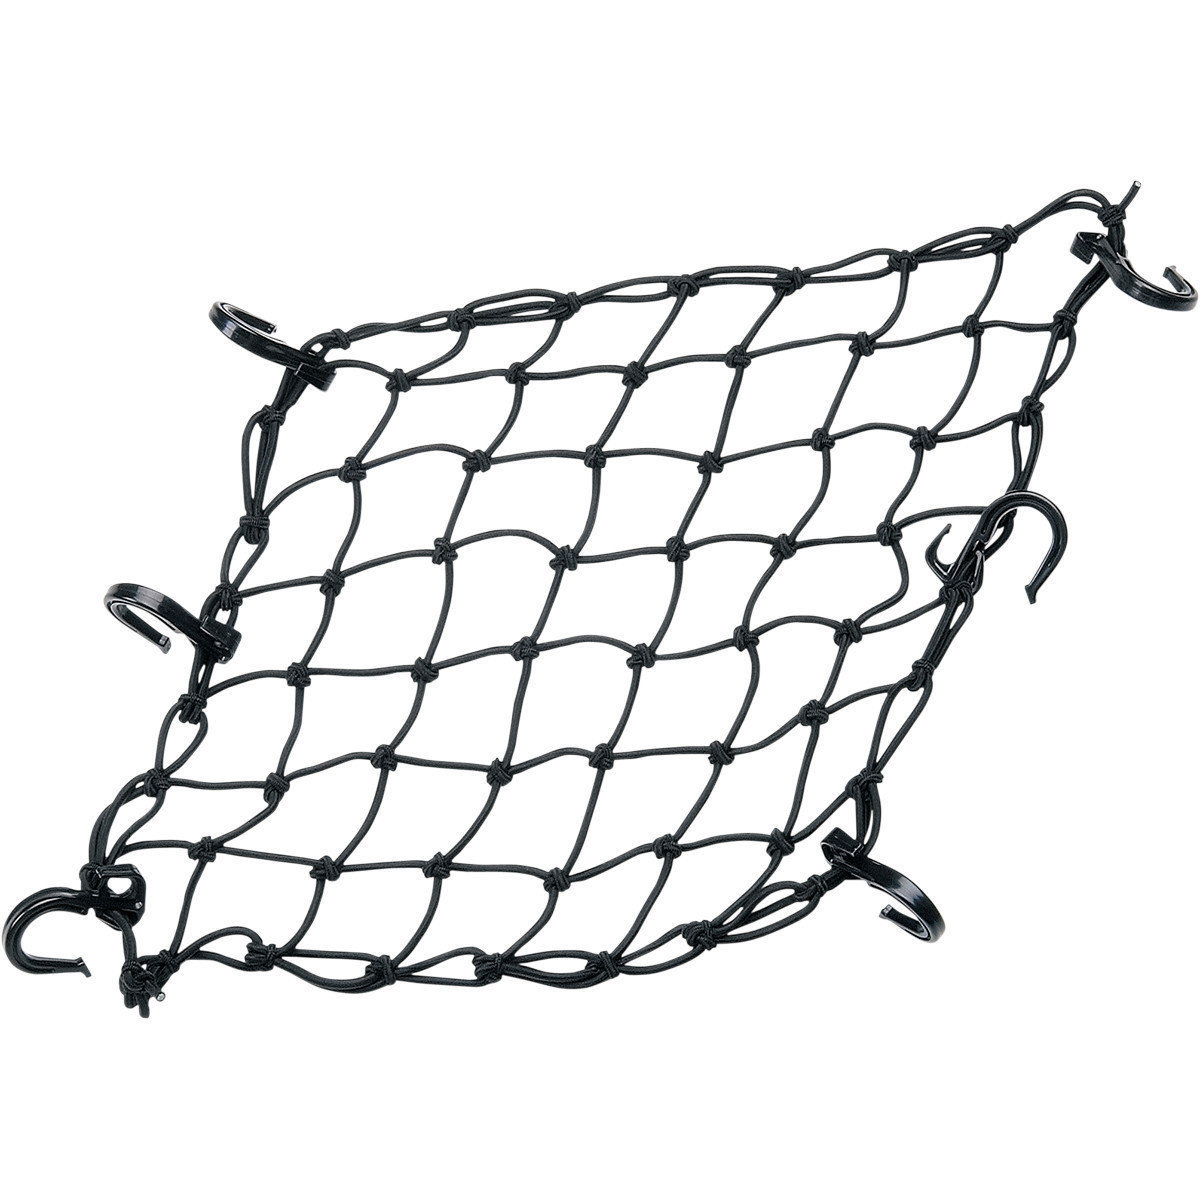 Mreža za prtljagu / Pauk za prtljagu PowerTye Cargo Net 38,1 cm 15'' X 38,1 cm 15'' Black Textile Plastic